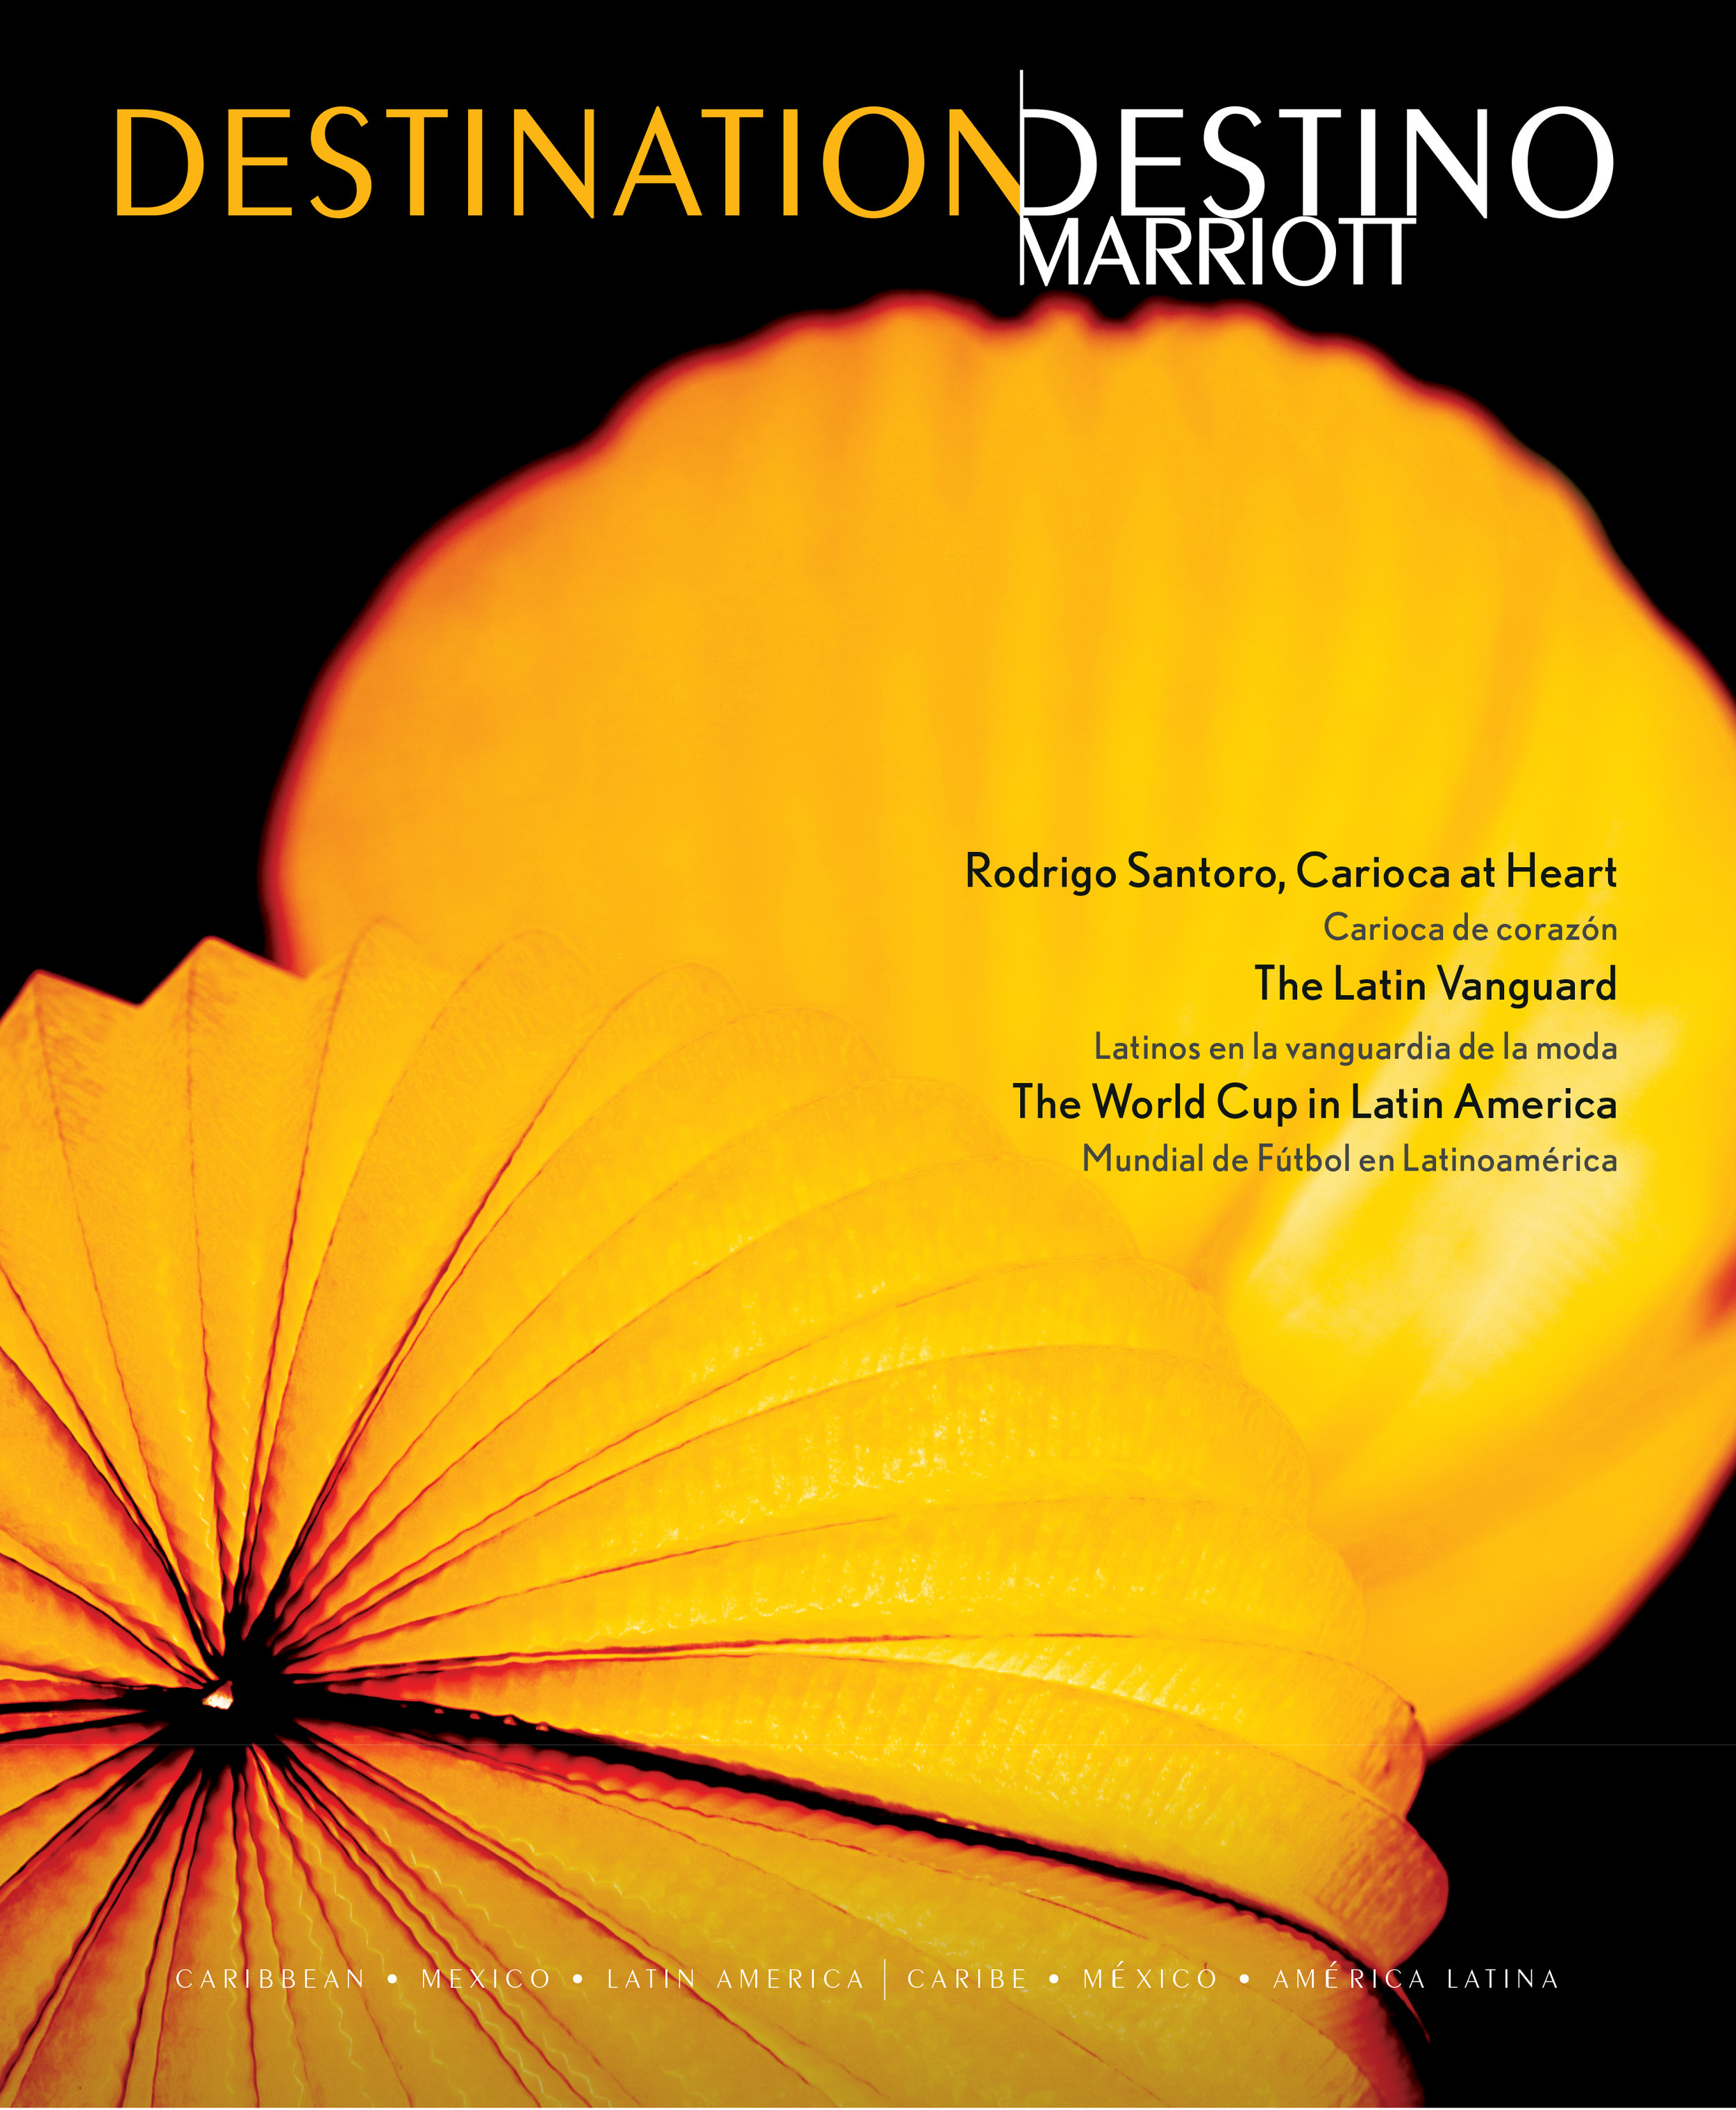 Destination/Destino Marriott